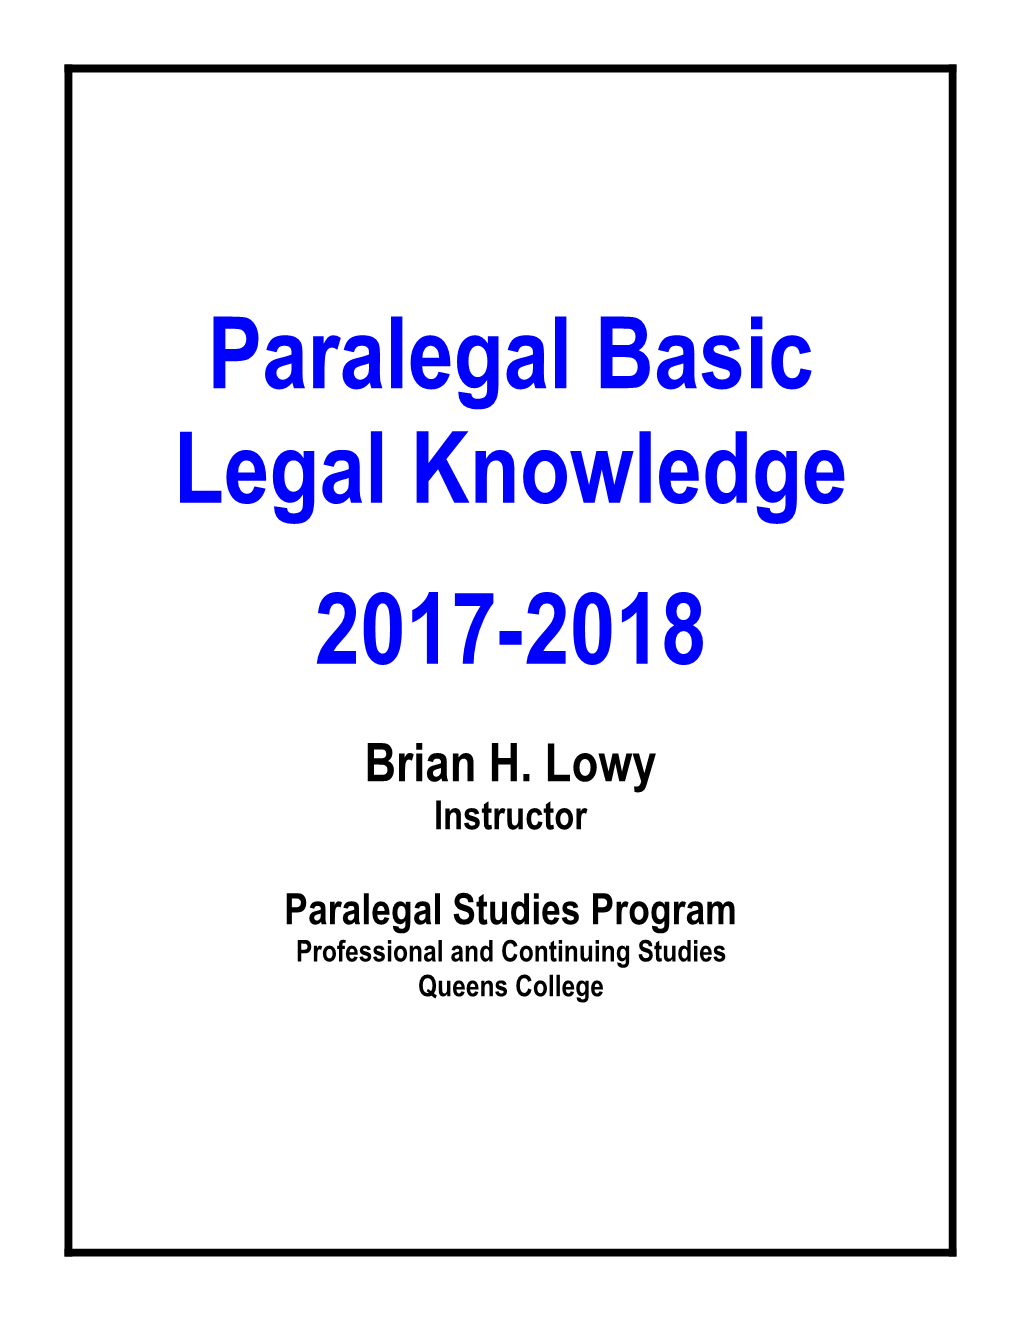 Paralegal Basic Legal Knowledge 2017-2018